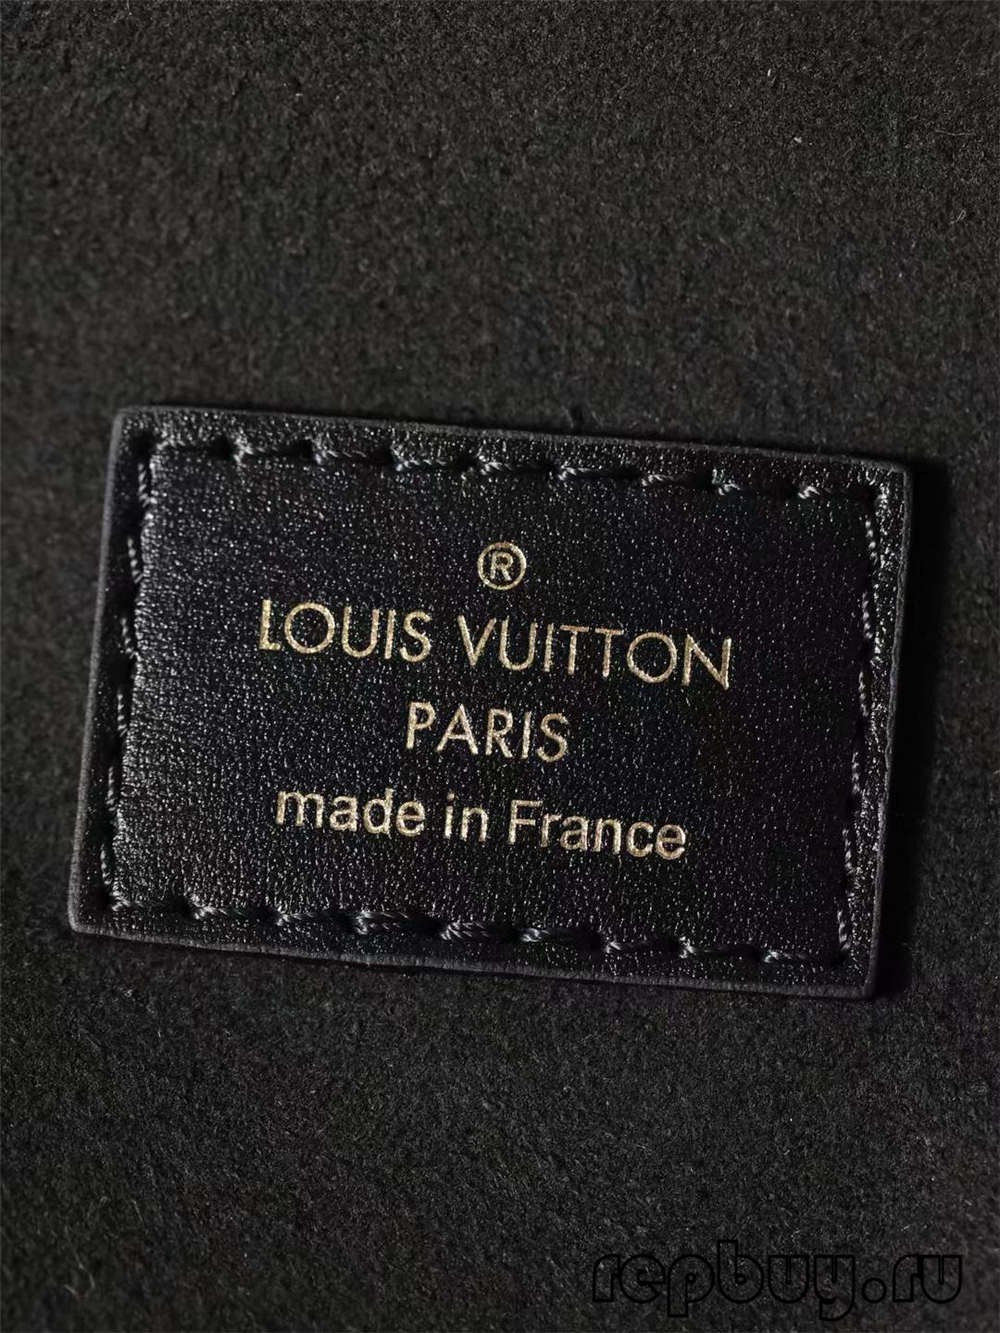 Louis Vuitton M45165 VANITY Small Top Replica Handbag Logo and Closure Detail (2022 Updated)-Tulaga sili ona lelei Fake Louis Vuitton Bag Faleoloa i luga ole laiga, Replica designer bag ru